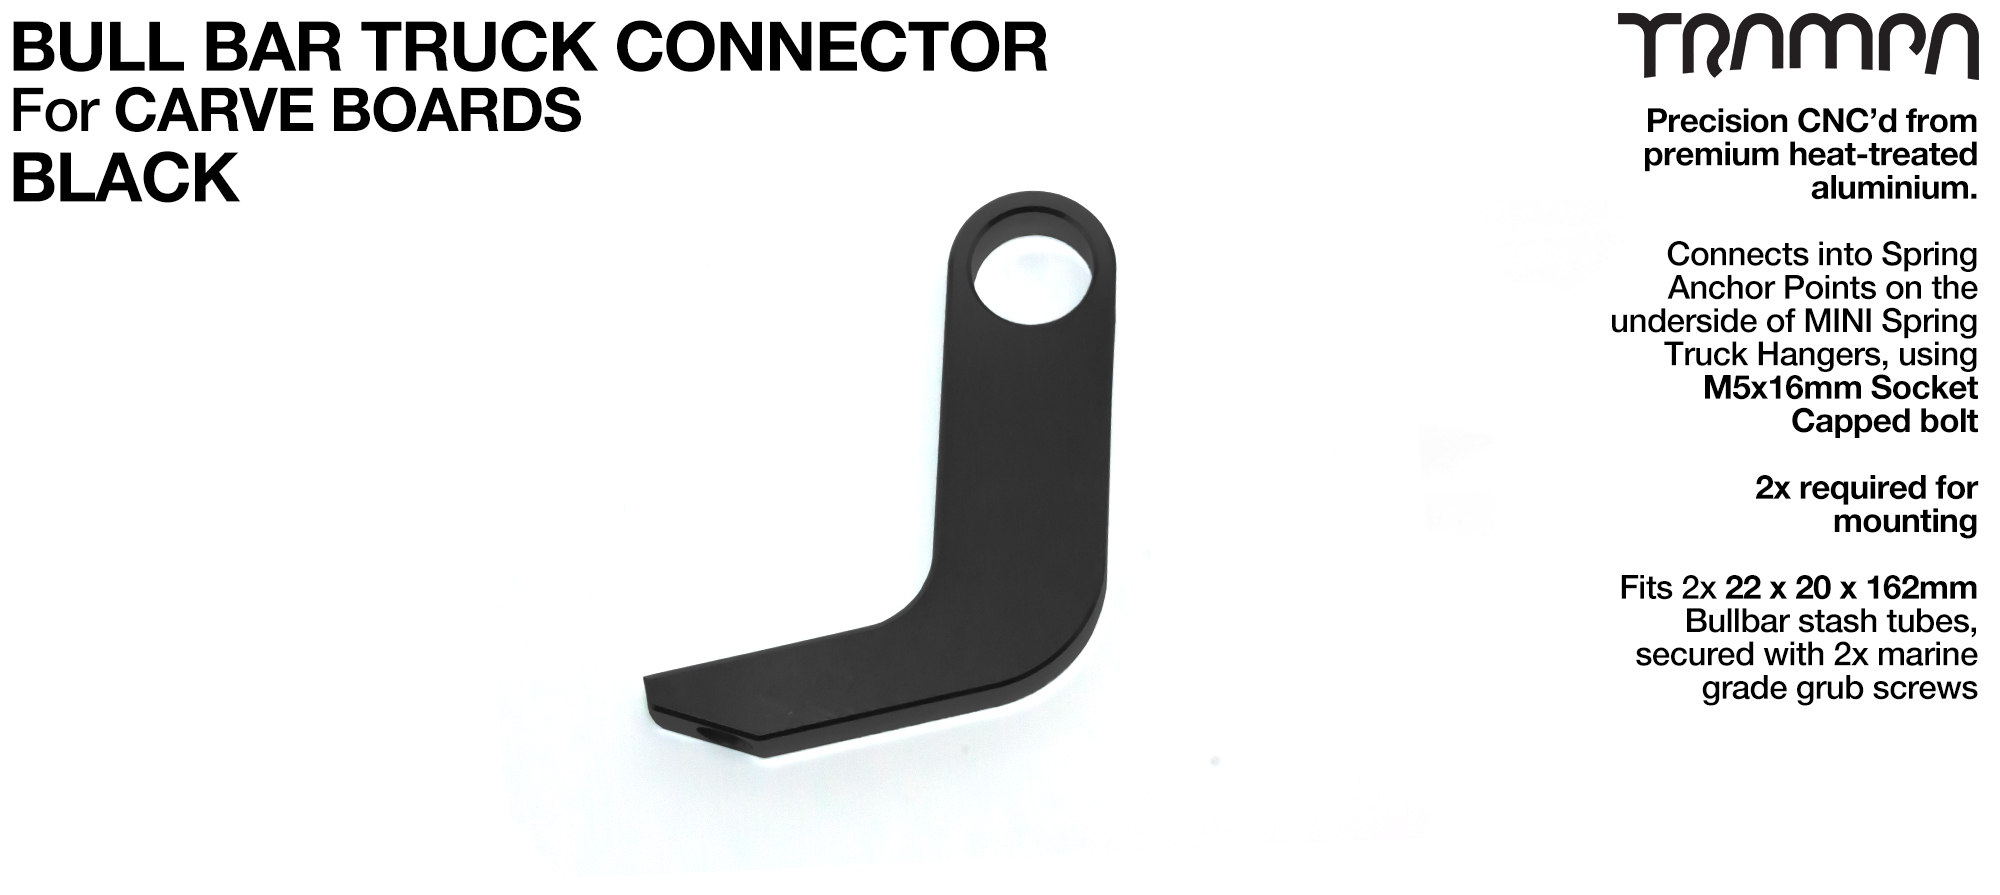 Carve Board Bull Bar connector - BLACK